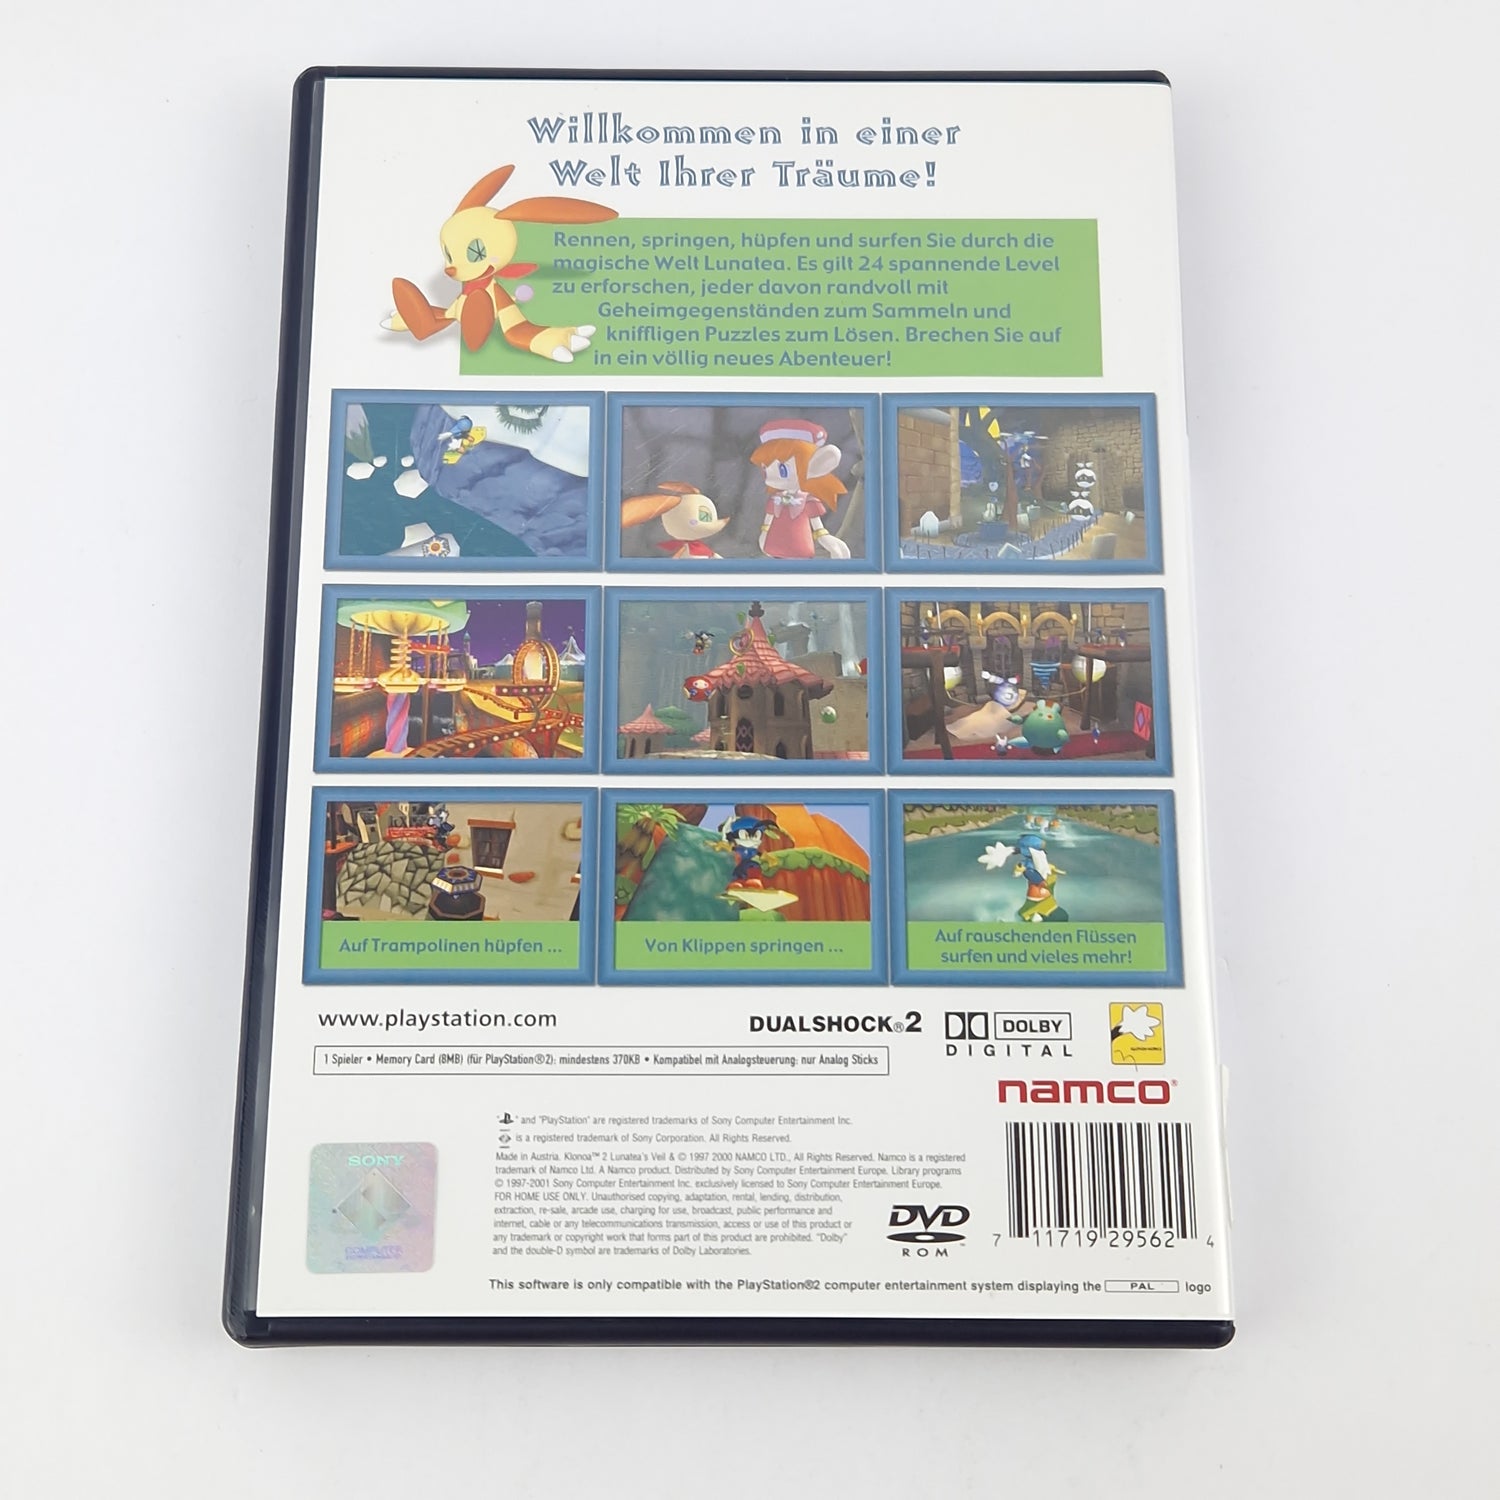 Playstation 2 Game: Klonoa 2 Lunatea s Veil - CD Disk Instructions OVP SONY PS2